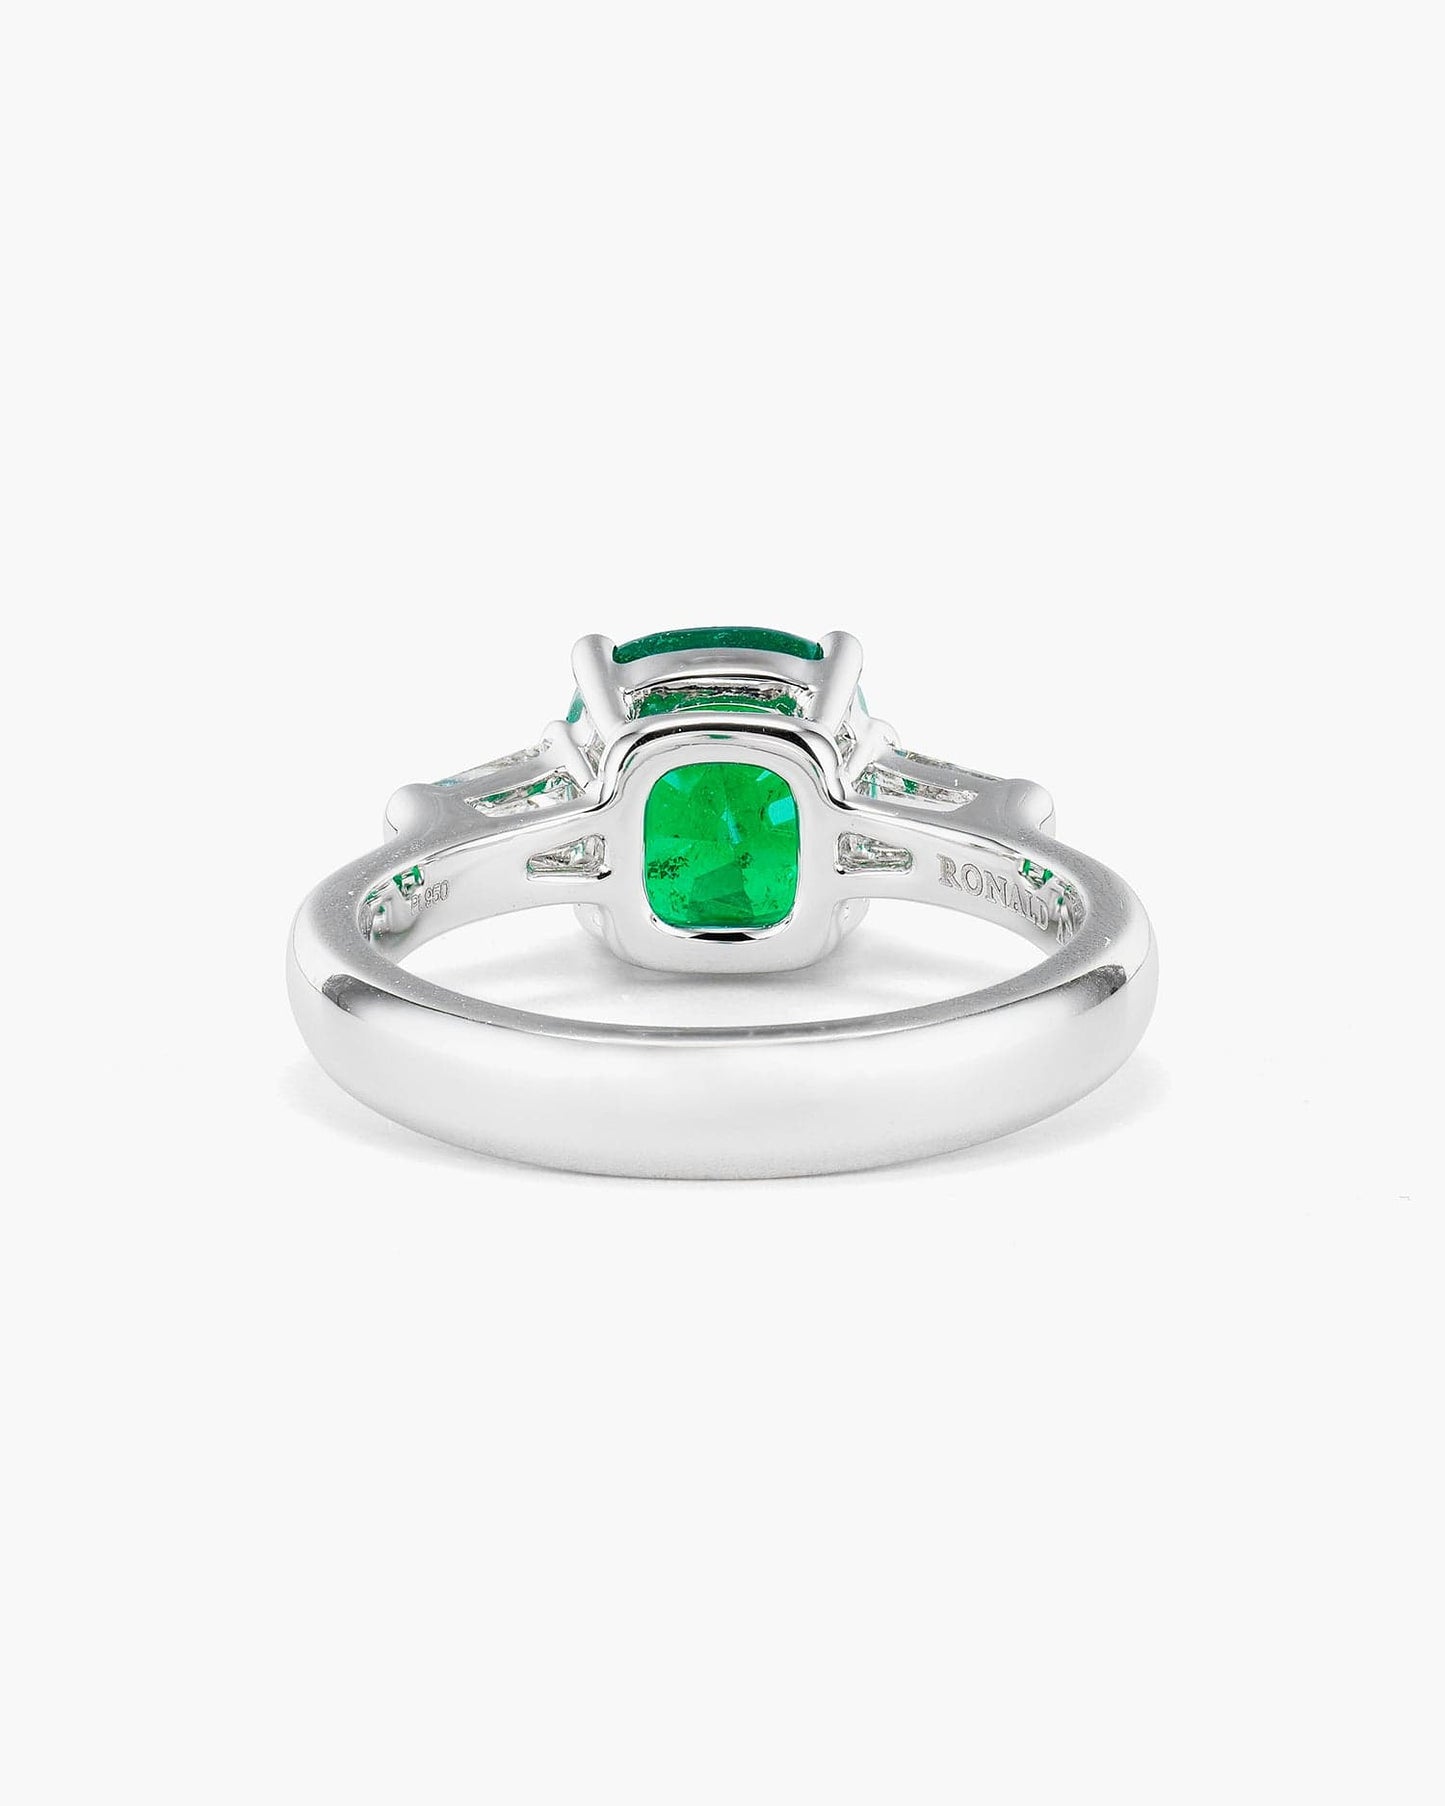 2.21 carat Cushion Cut Colombian Emerald and Diamond Ring